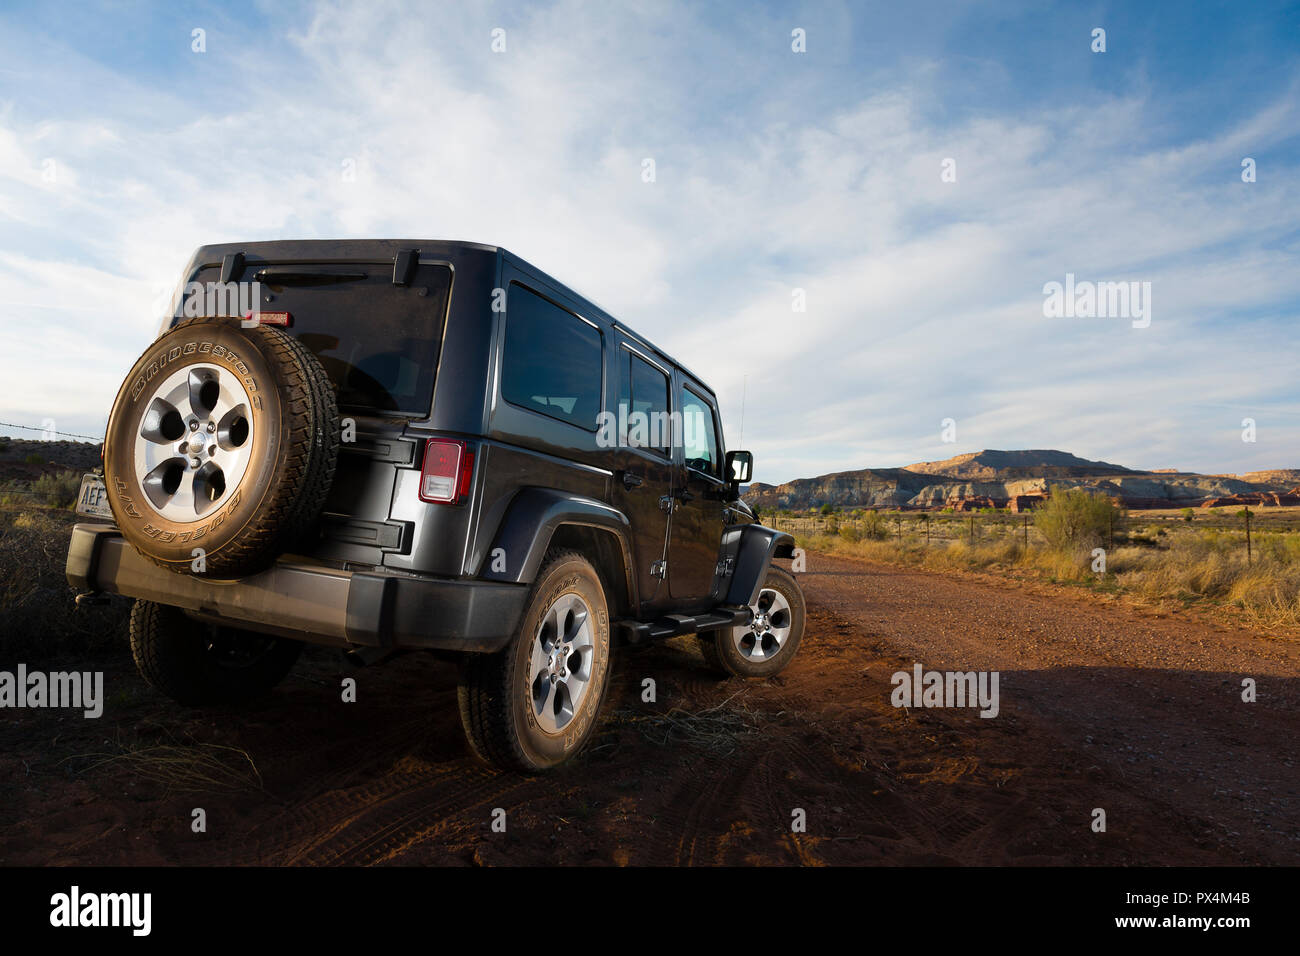 Arizona, USA. Jeep Wranger viewed from behind on desert track. Stock Photo